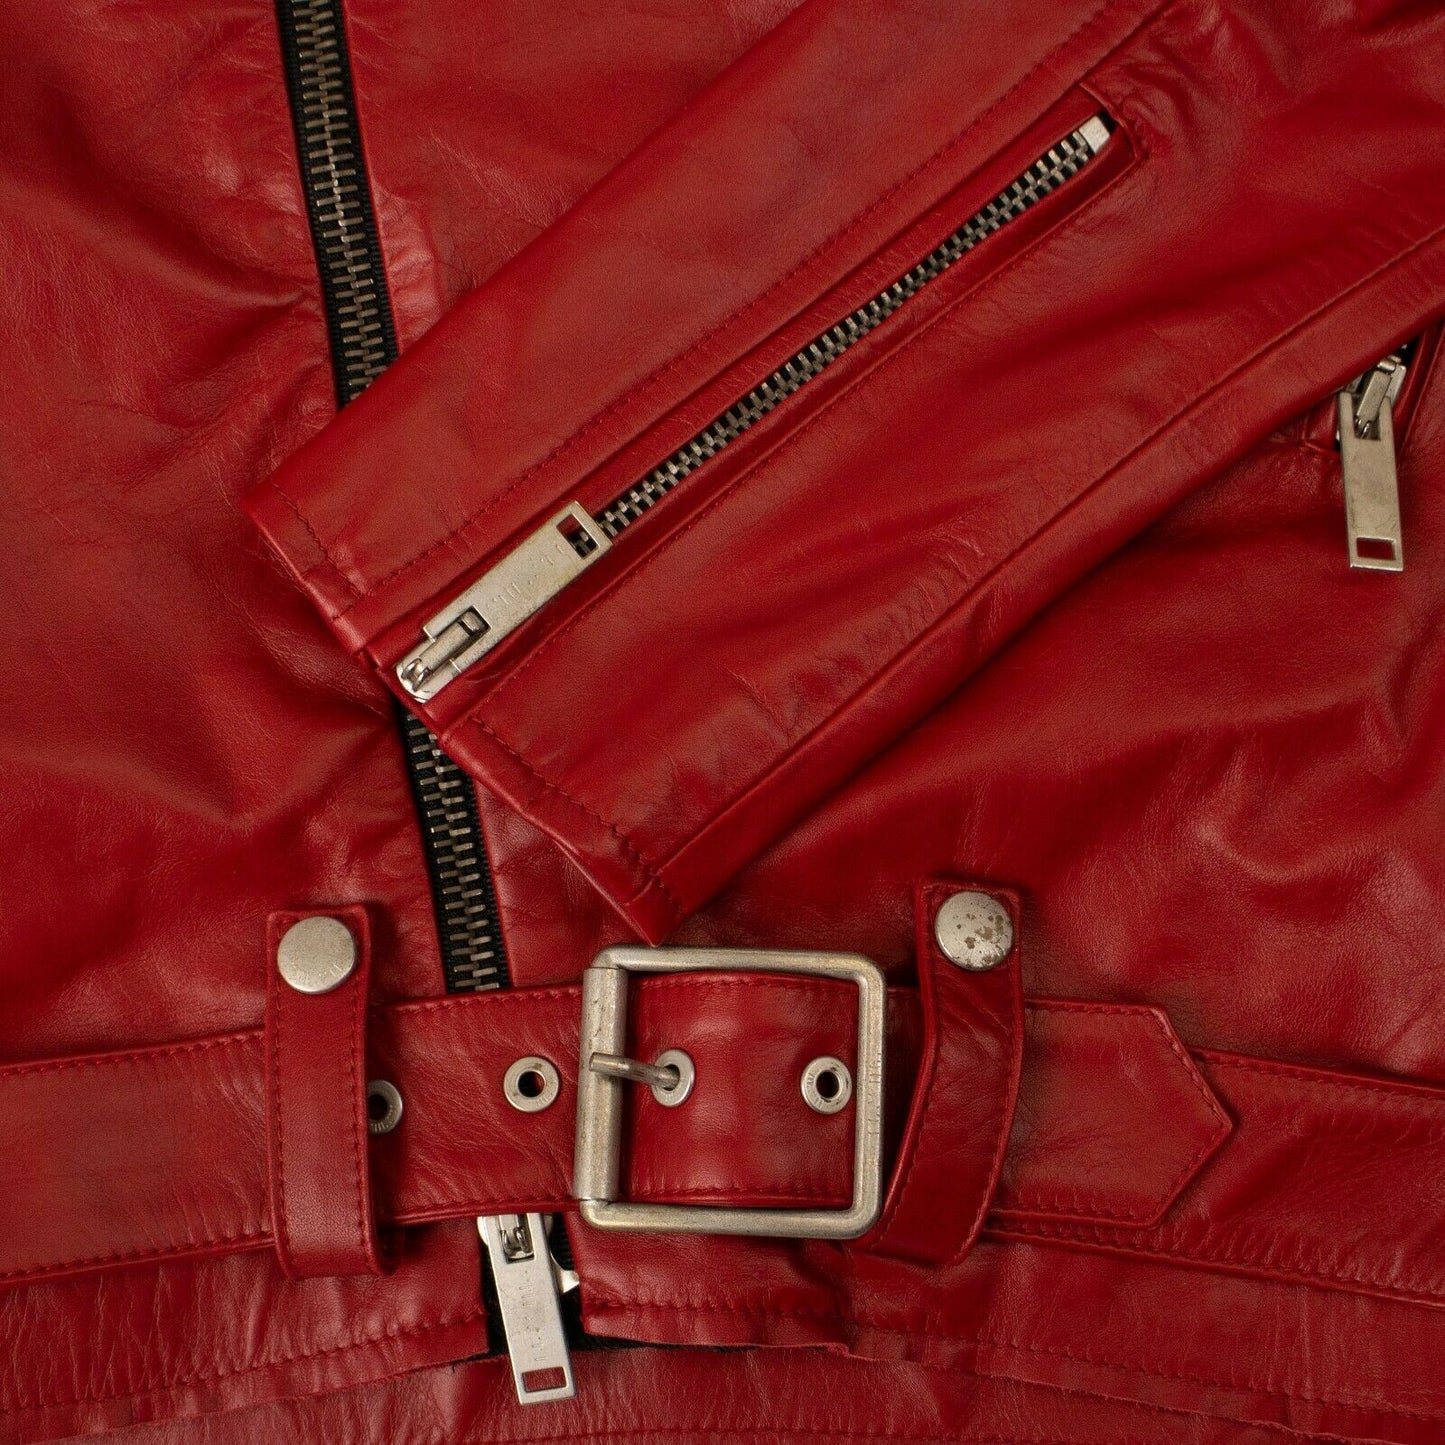 Unravel Project Leather Hybrid Biker Jacket - Red